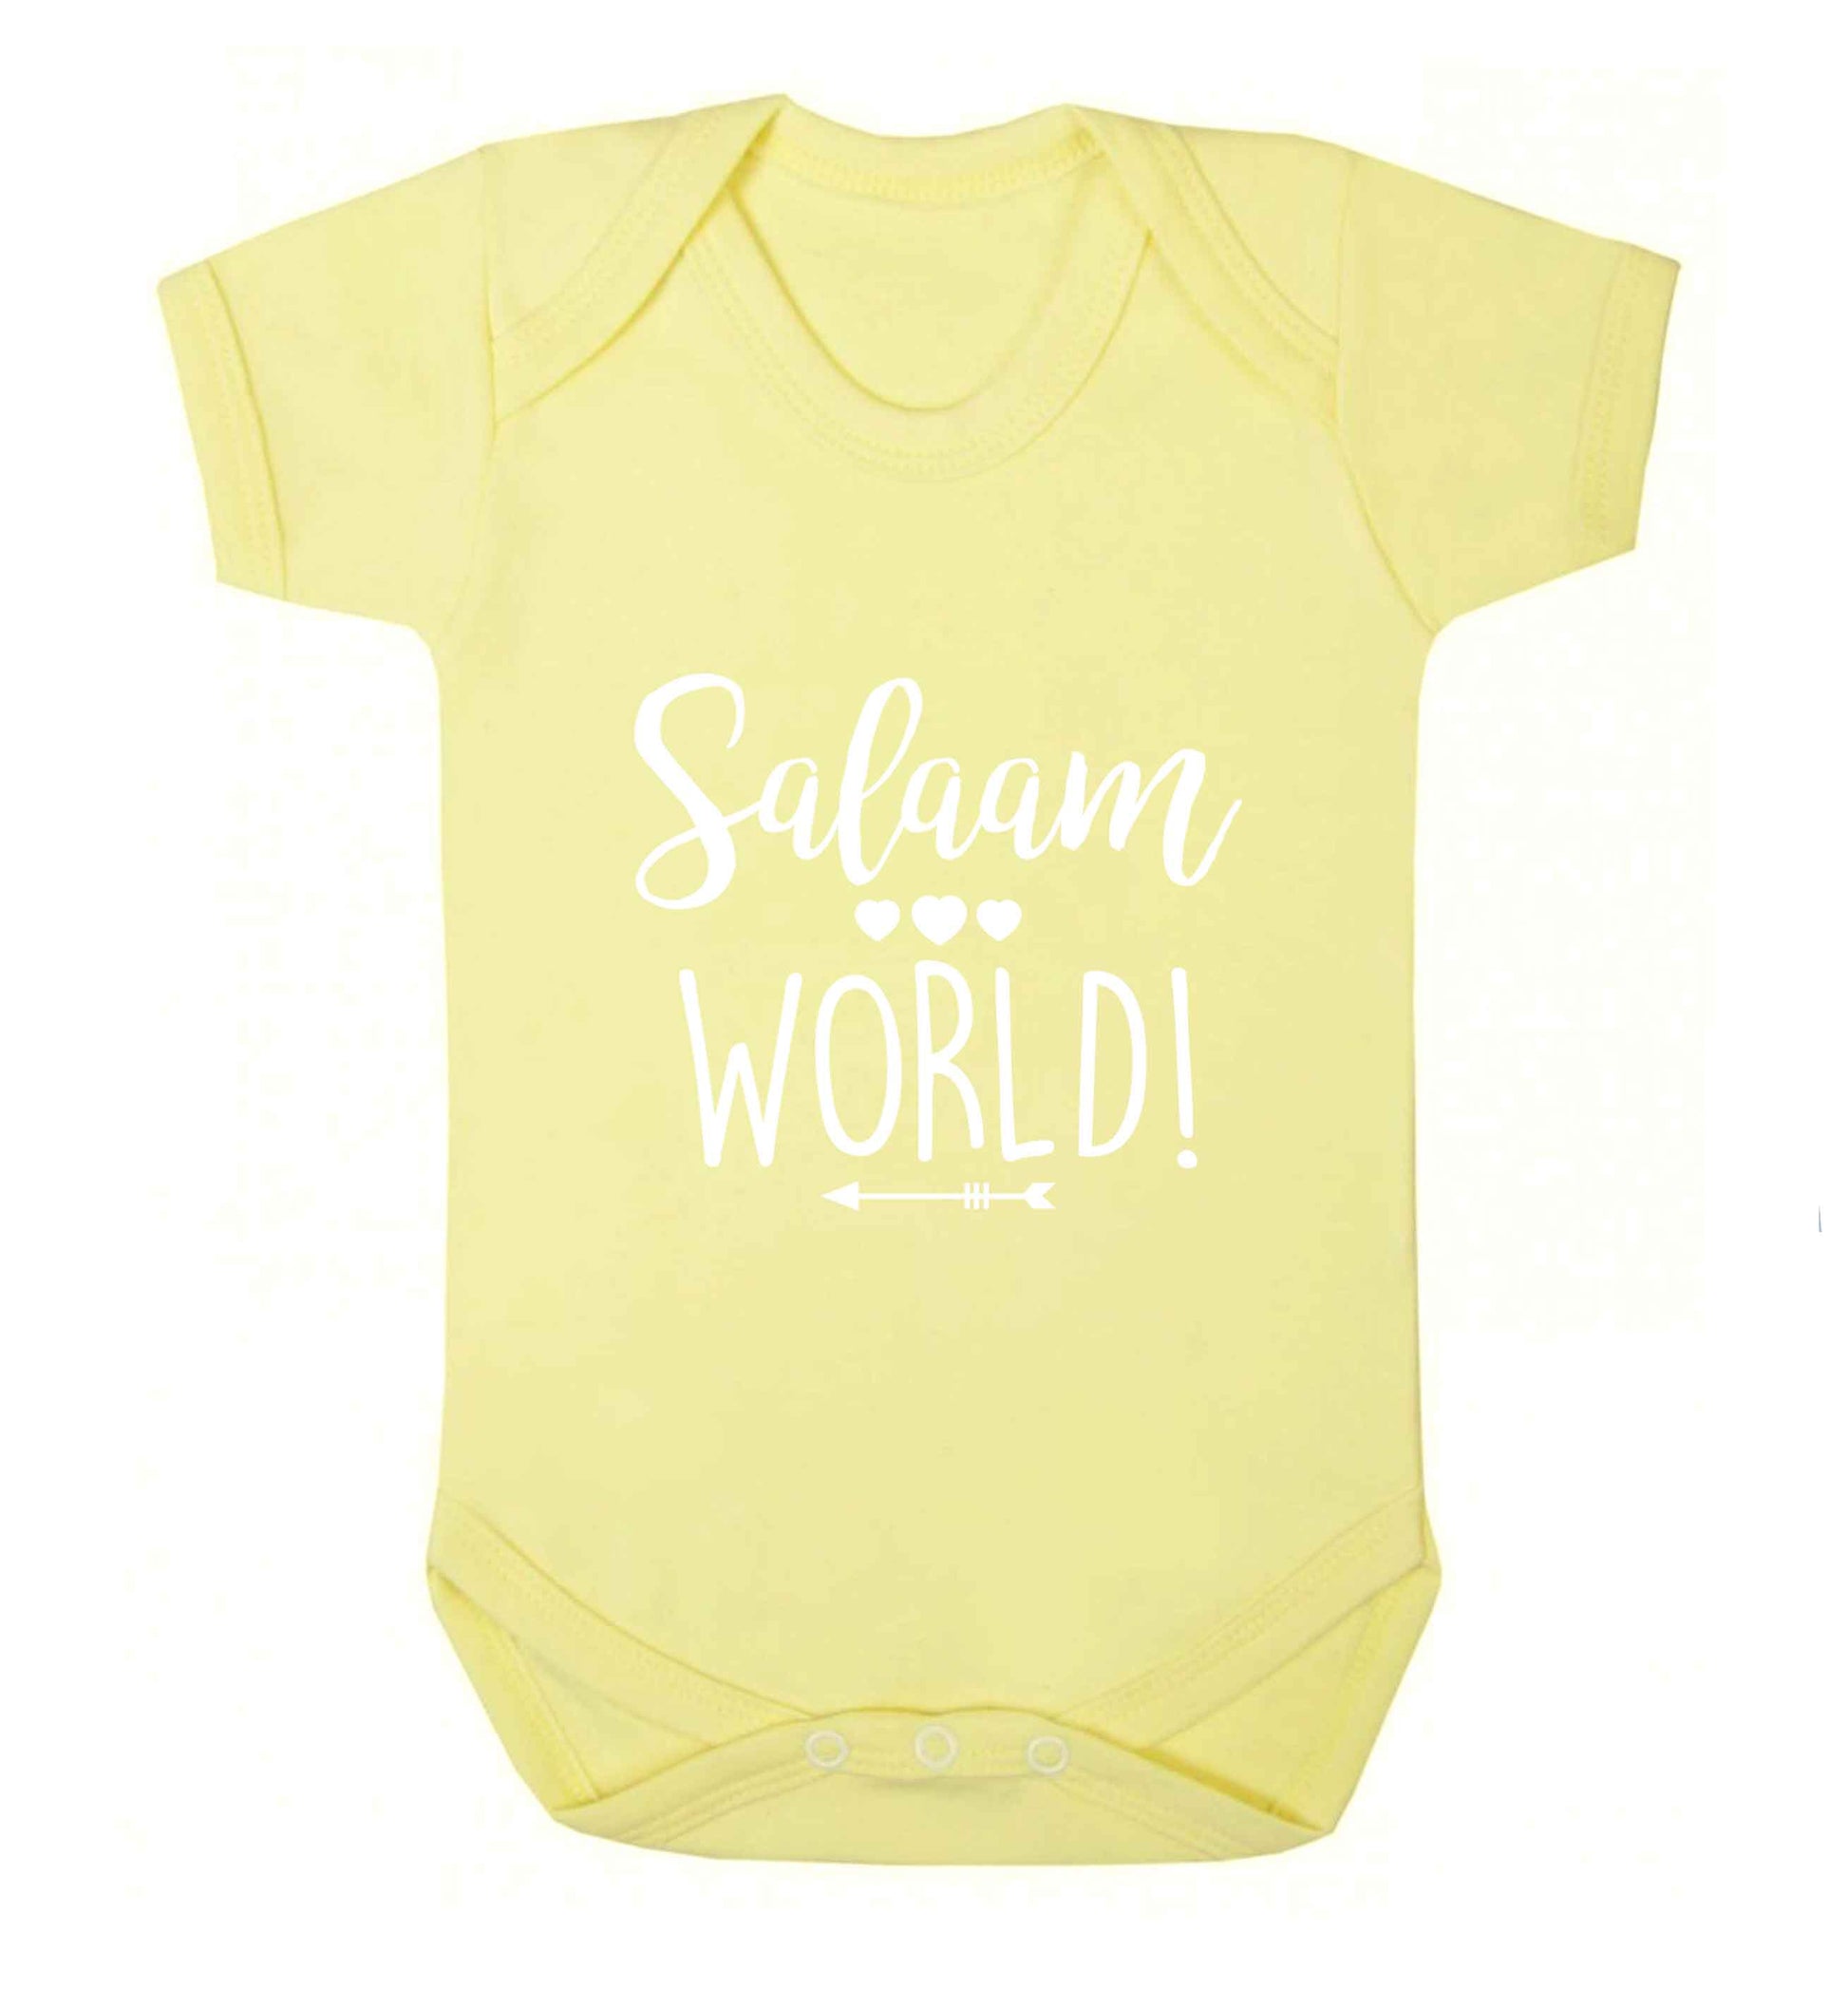 Salaam world baby vest pale yellow 18-24 months